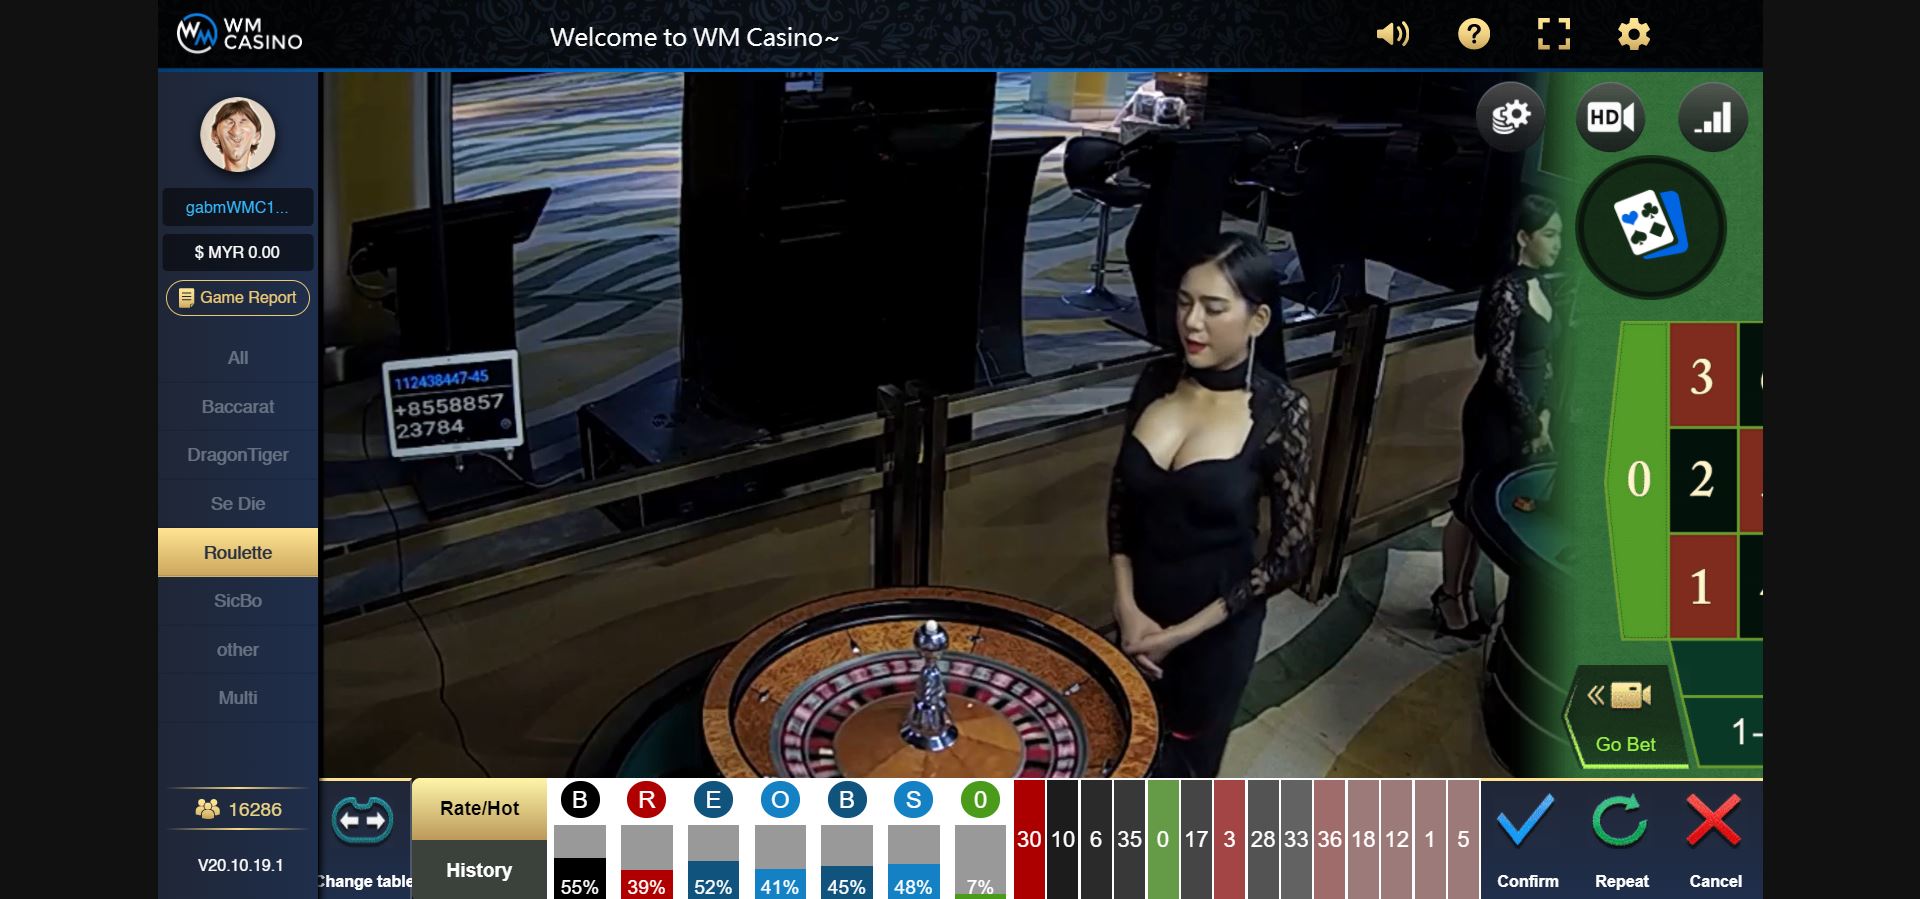 webmoney casino